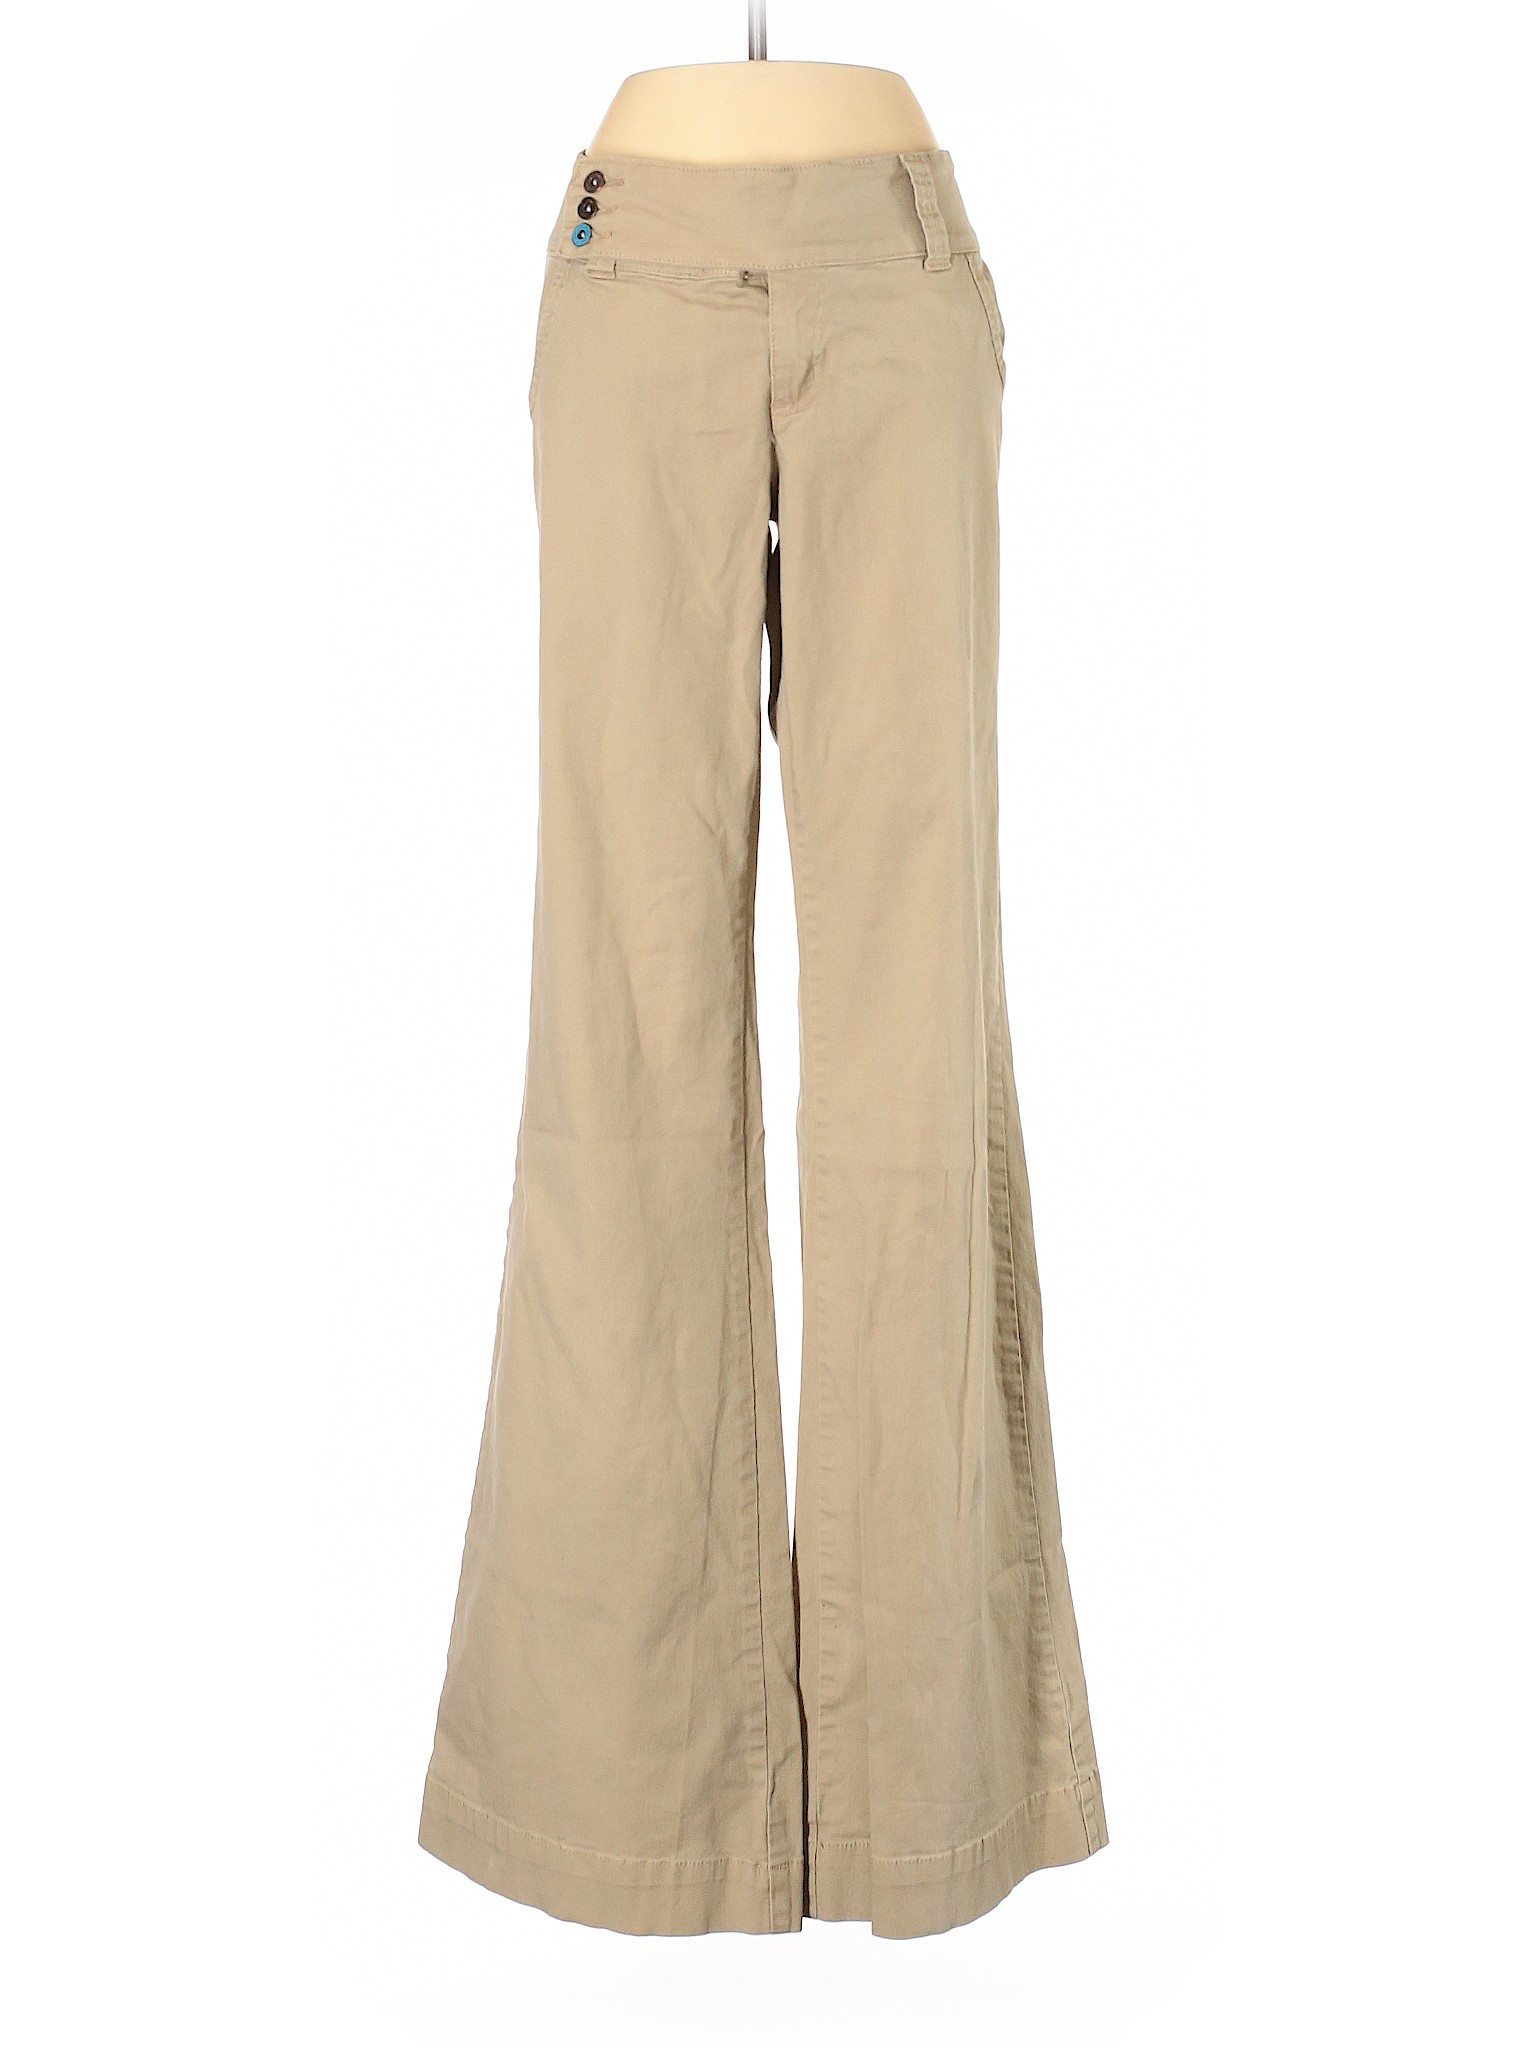 Spoon Jeans Women Brown Casual Pants 36 eur | eBay